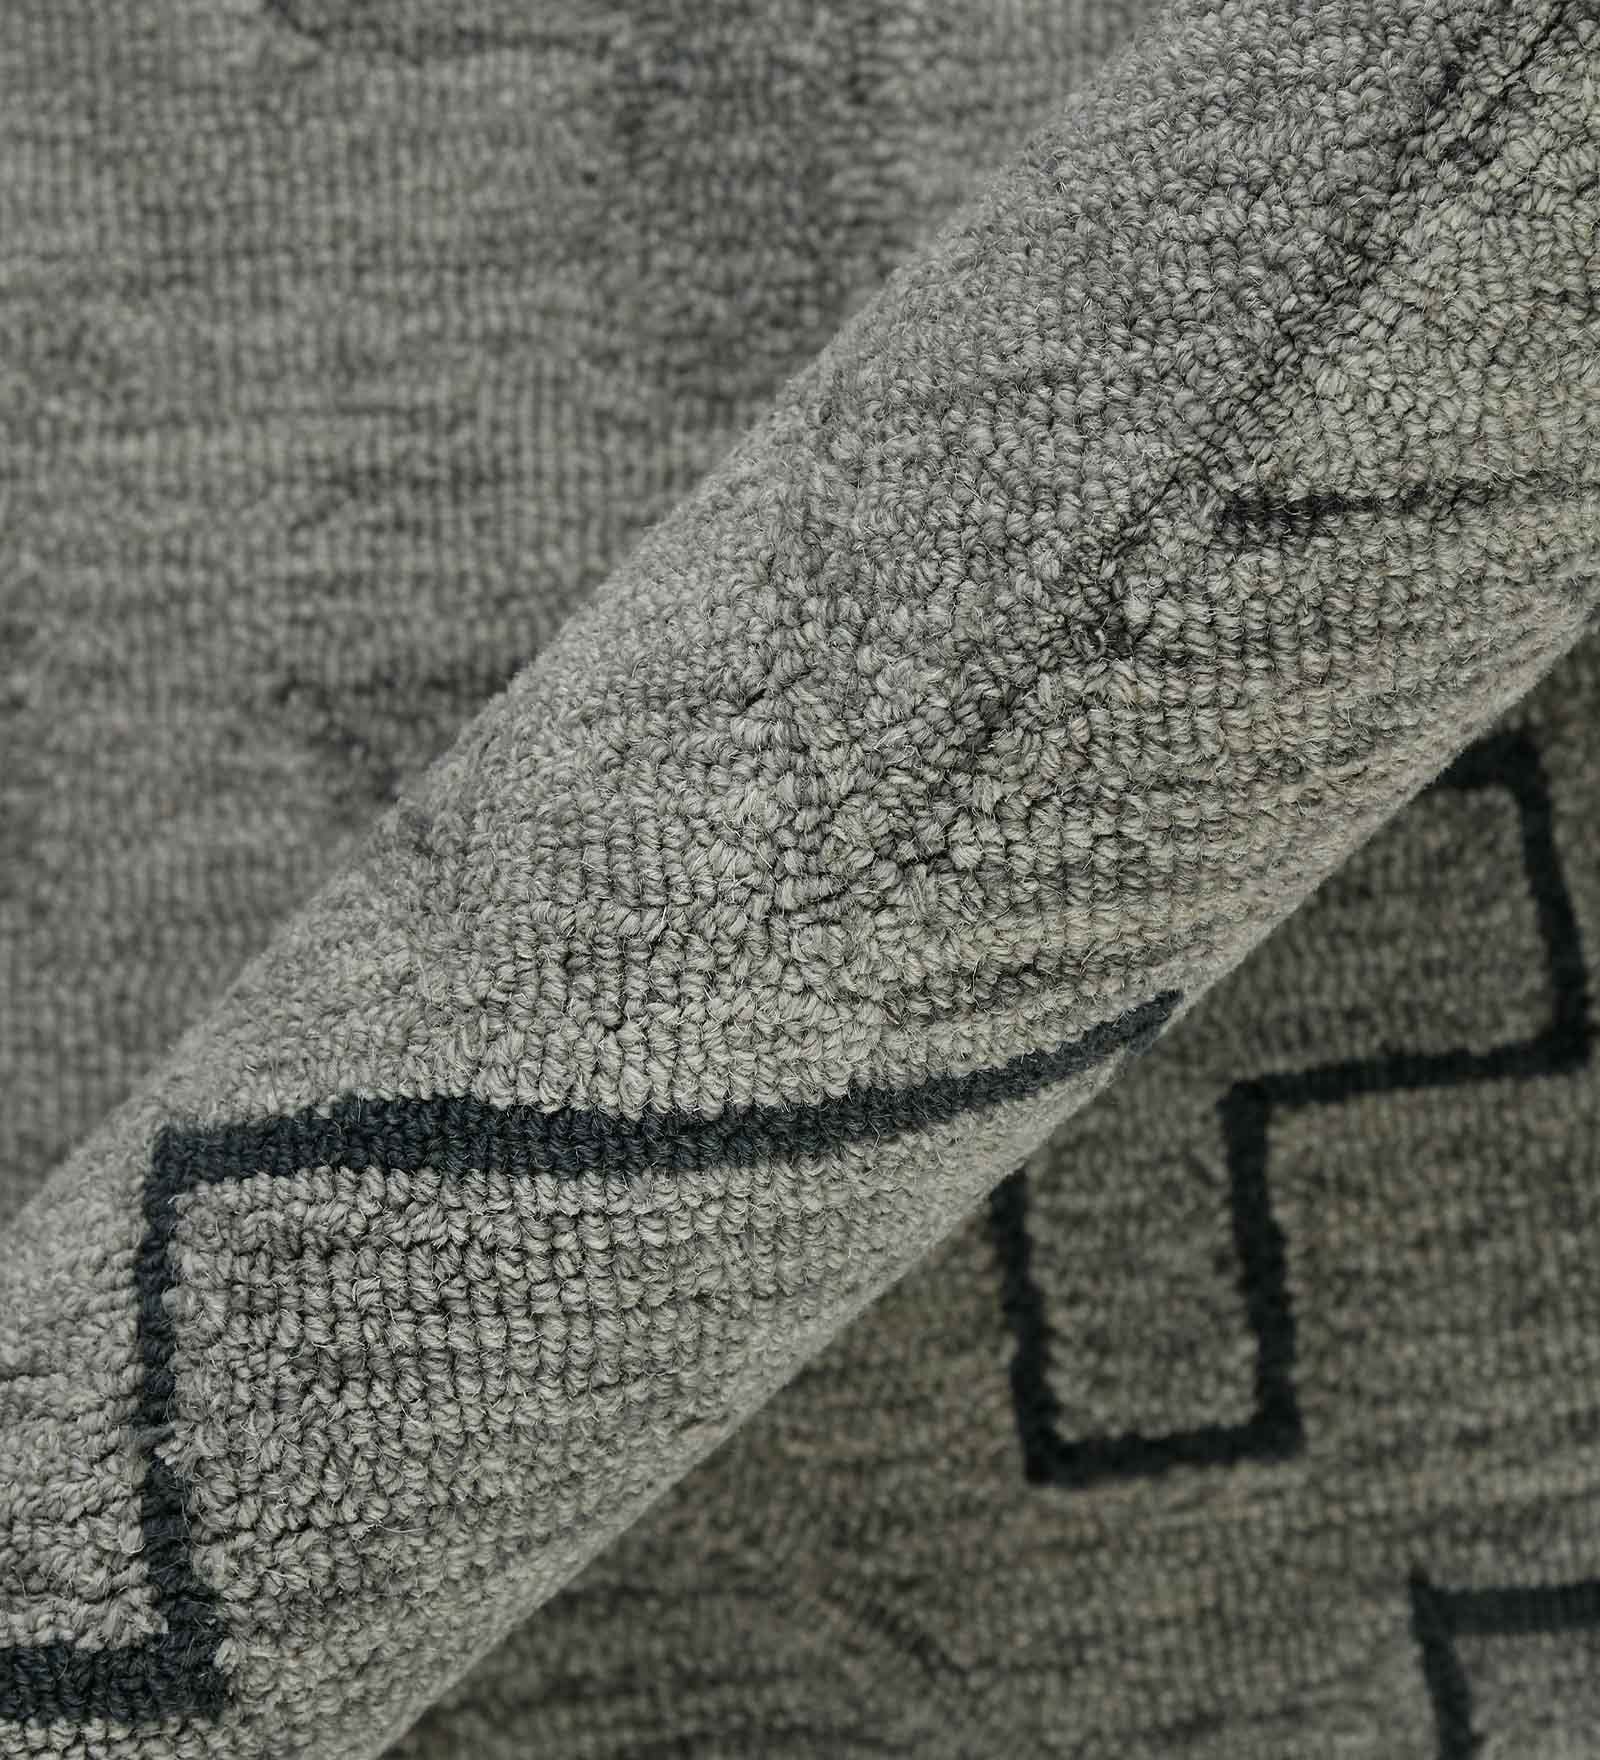 SHALE GRAY Wool Asteria 8x10 Feet  Hand-Tufted Carpet - Rug